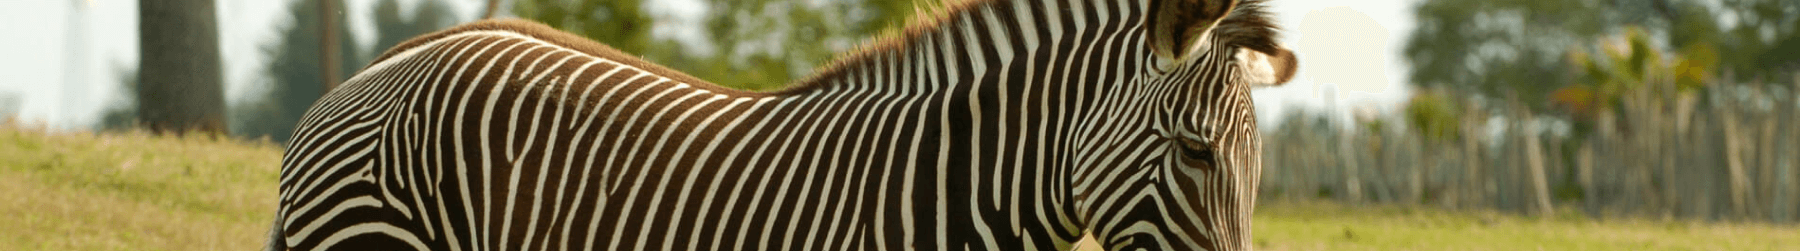 Grevy's Zebras at Busch Gardens Tampa Bay